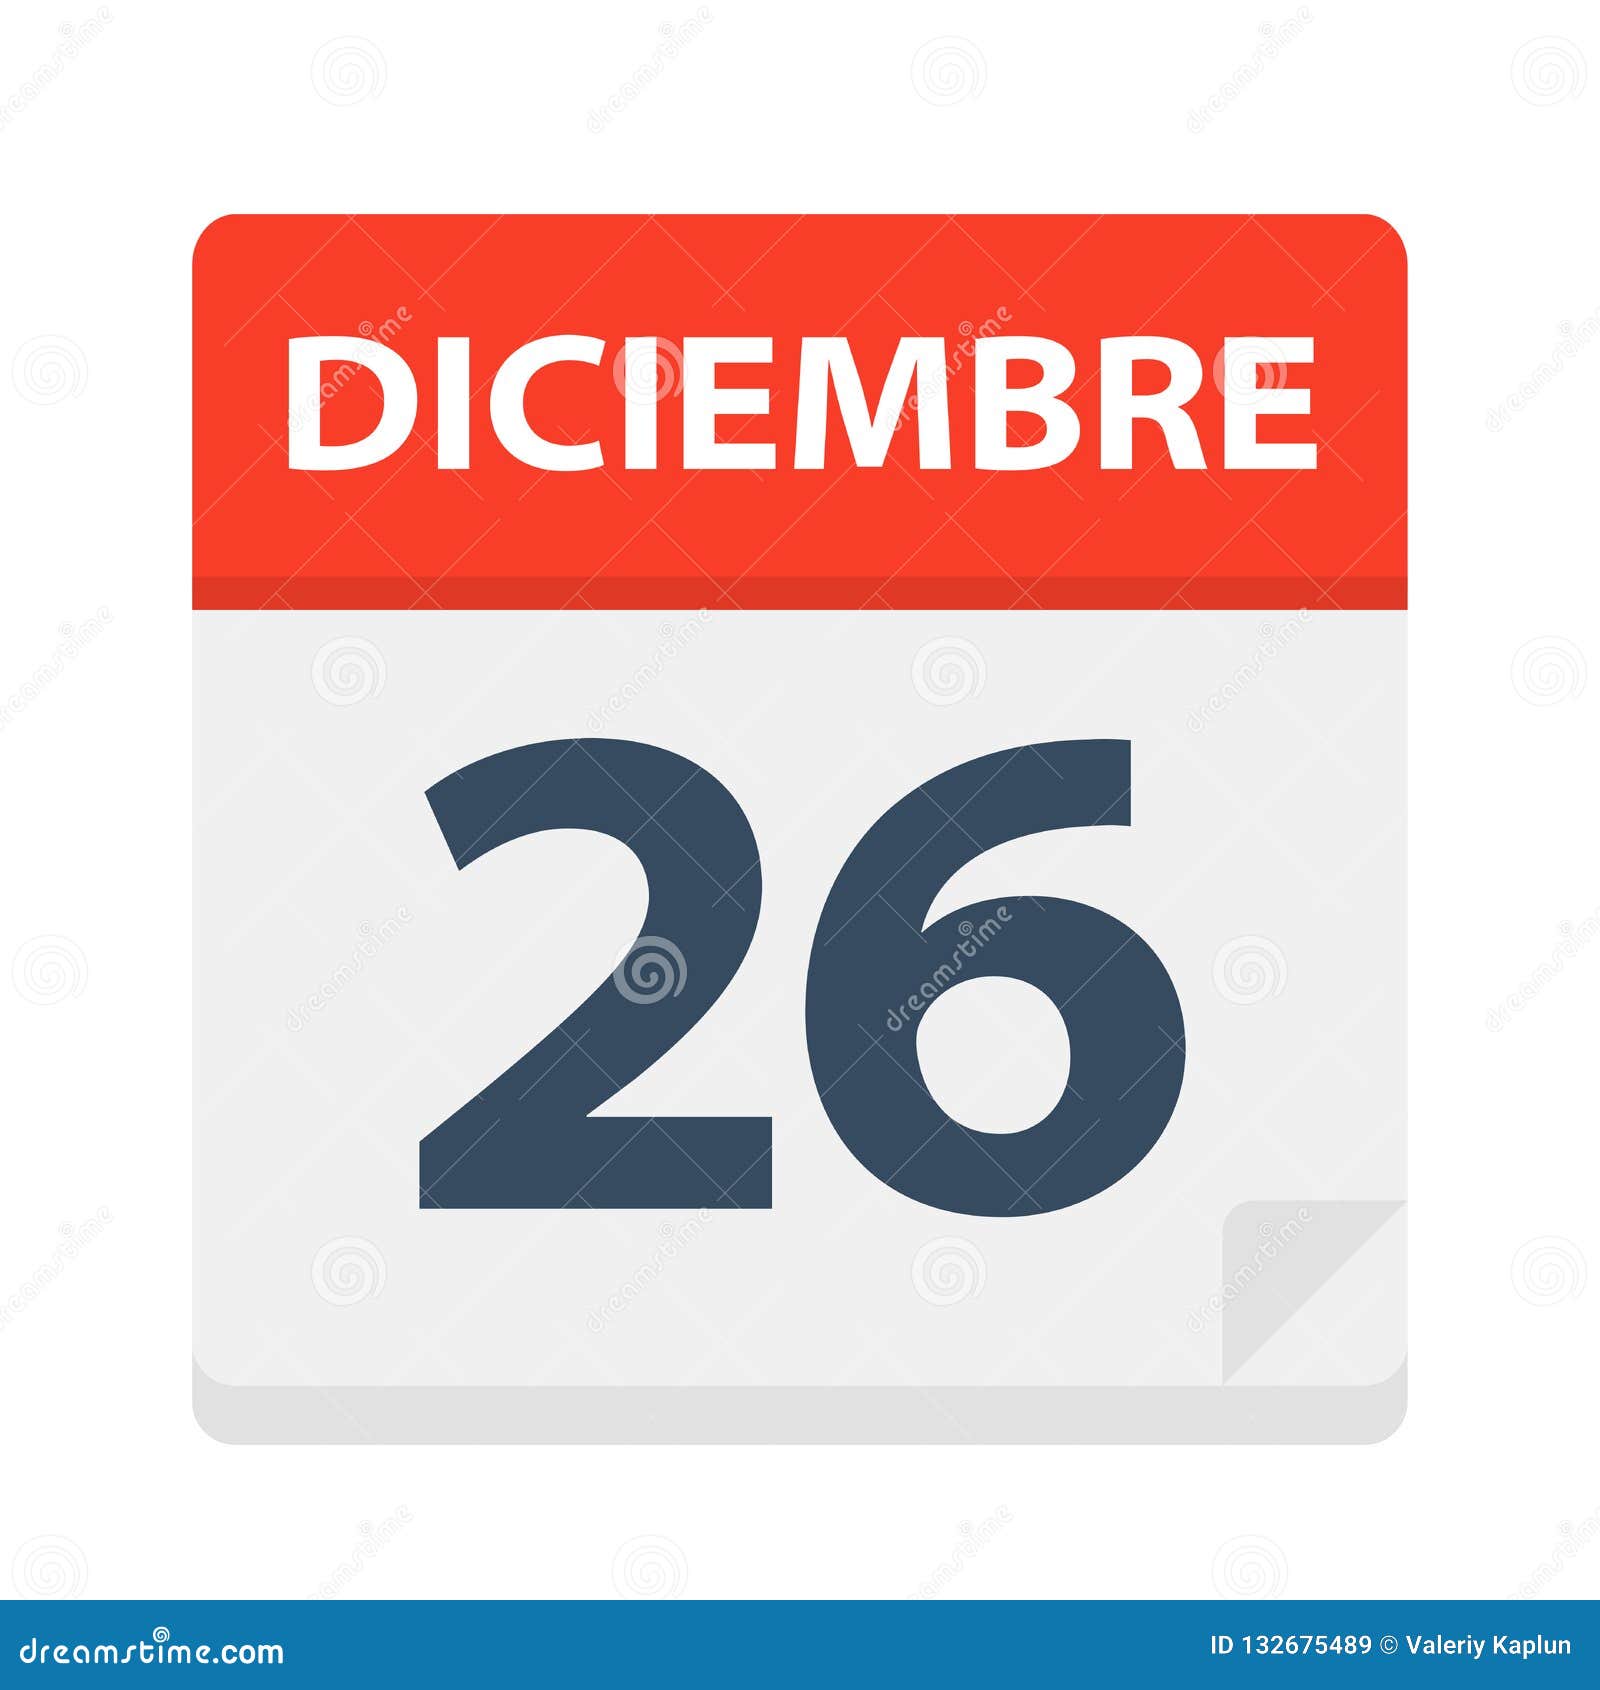 diciembre 26 - calendar icon - december 26.   of spanish calendar leaf